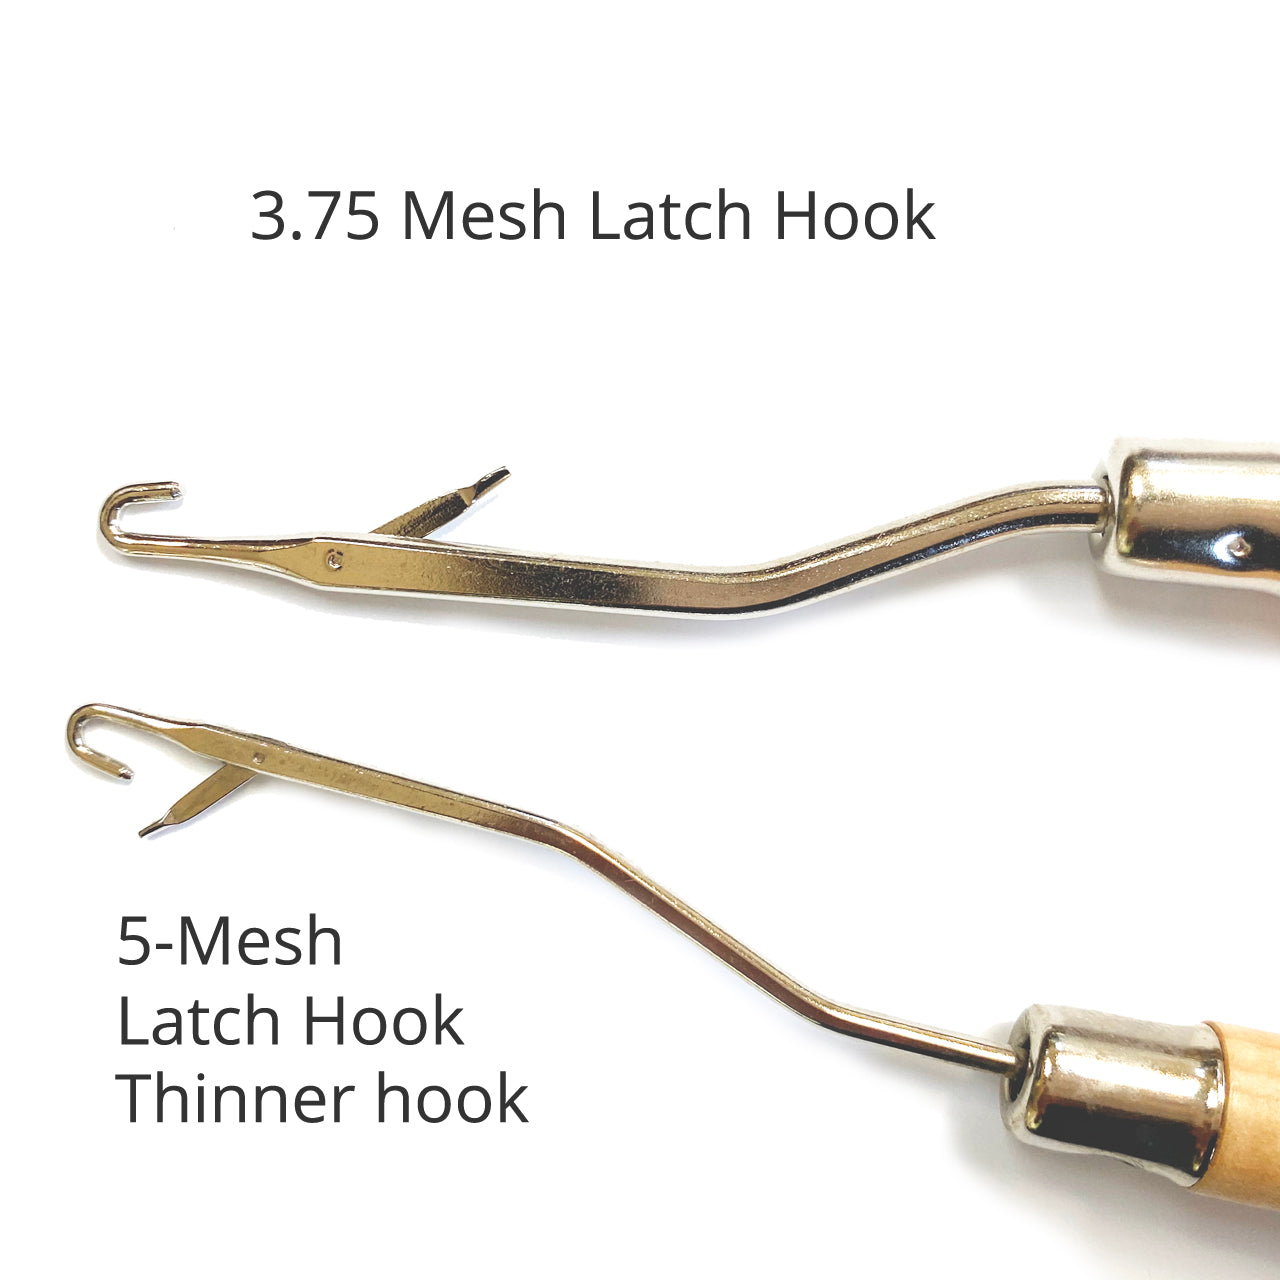 Herrschners 5-mesh Latch Hook Tool